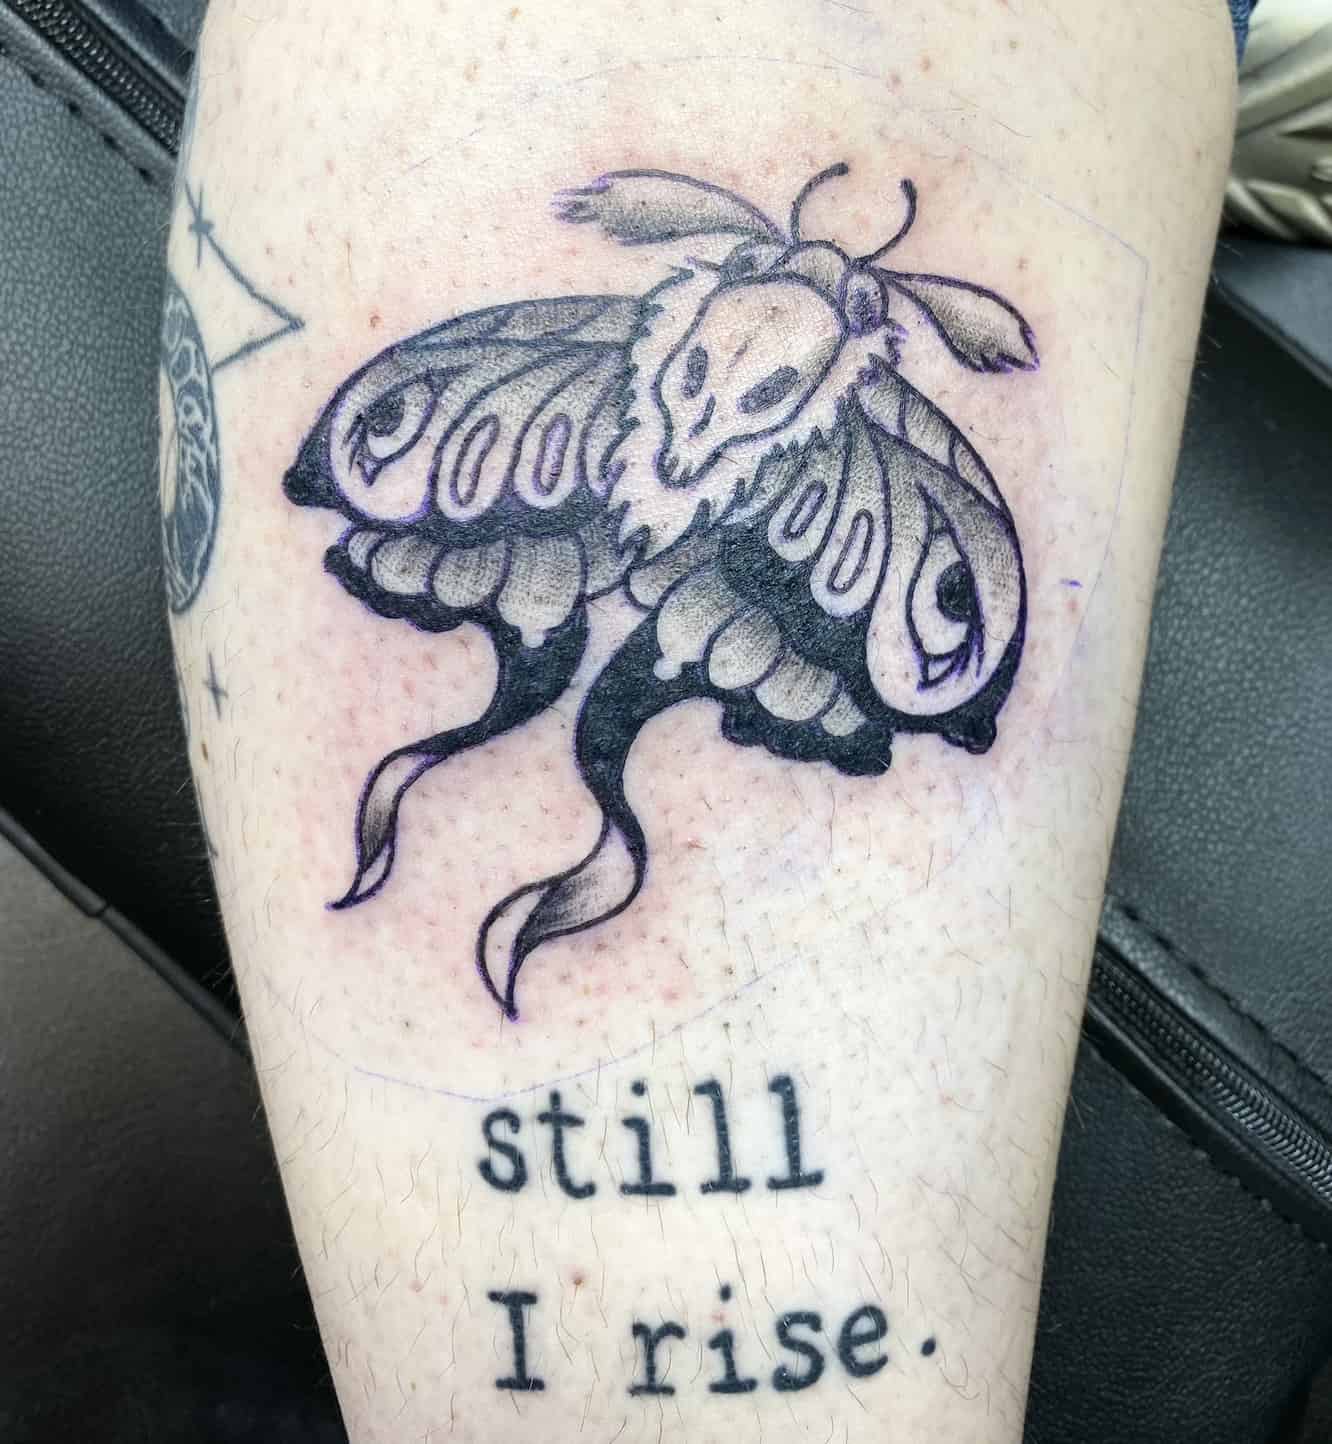 Omaha moth tattoo